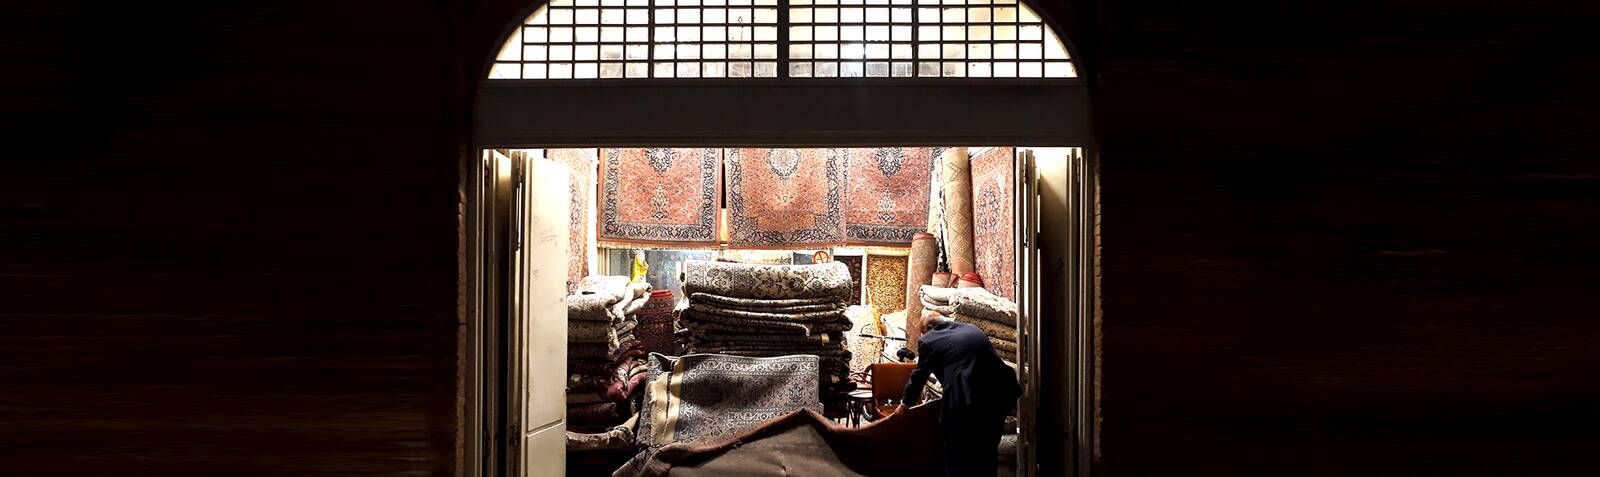 Isfahan carpet bazaar